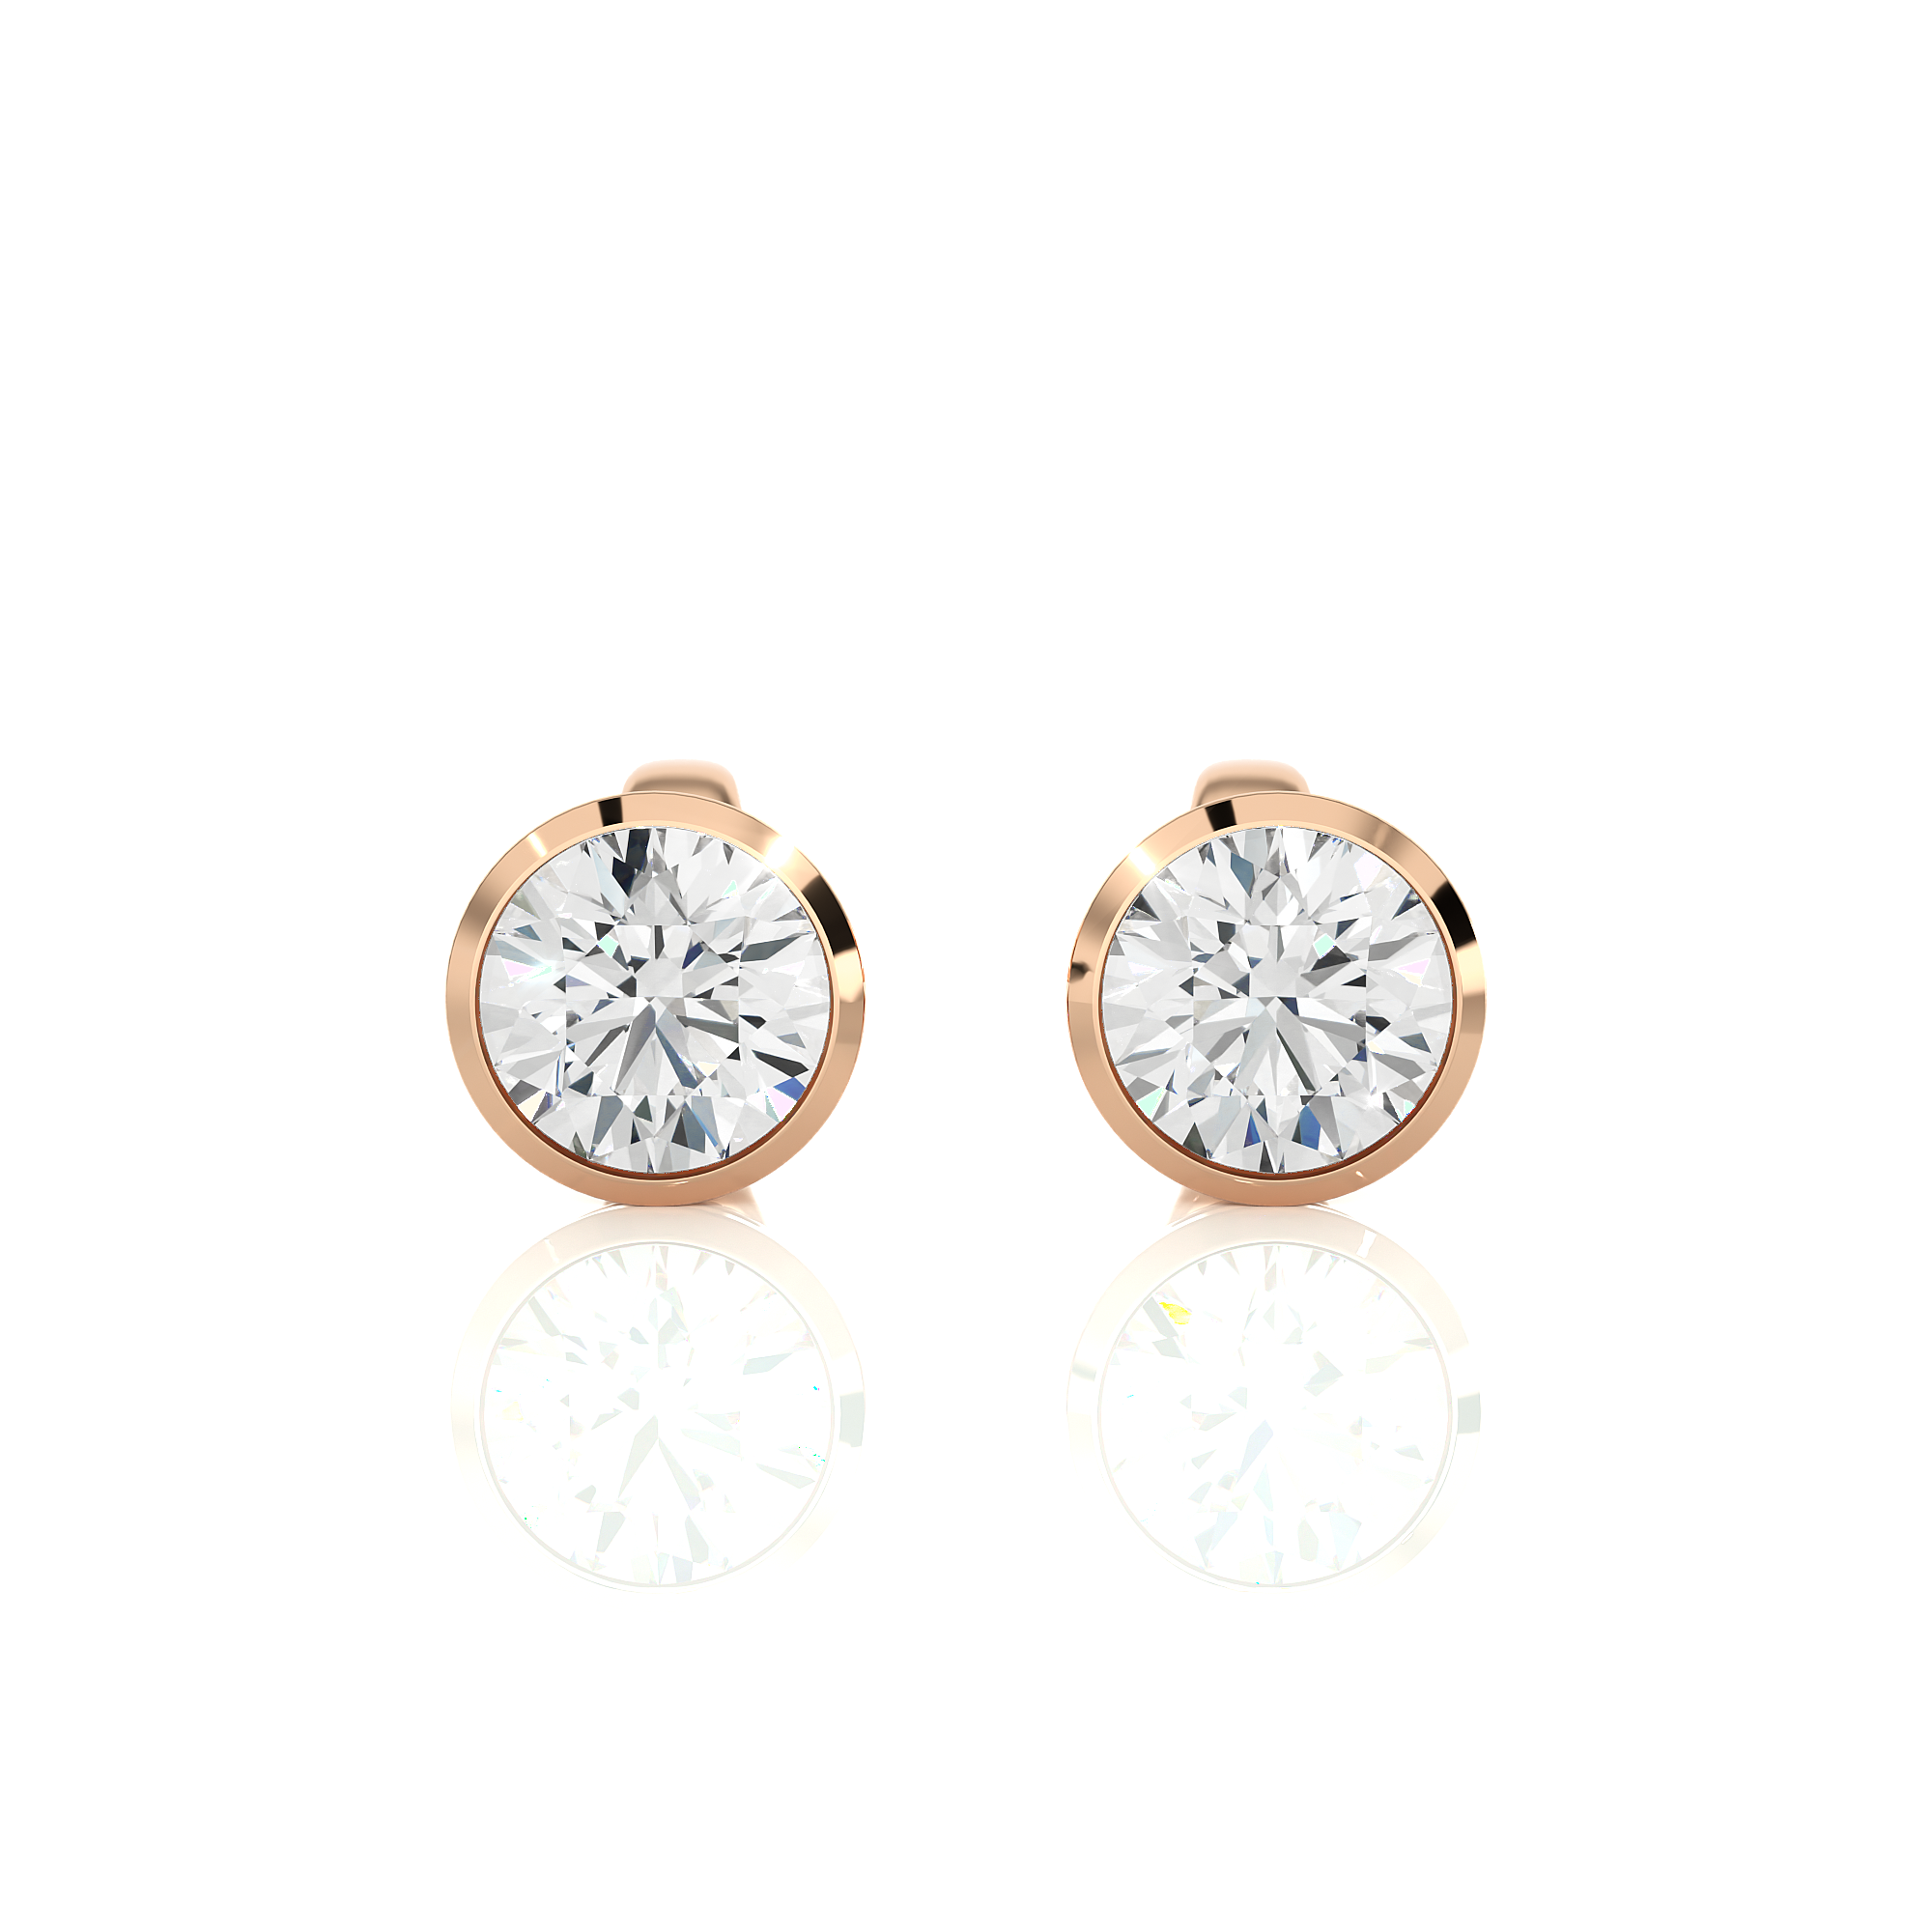 1.18 Ct Round Cut Diamond Stud Earrings in Rose Gold - Blu Diamonds 